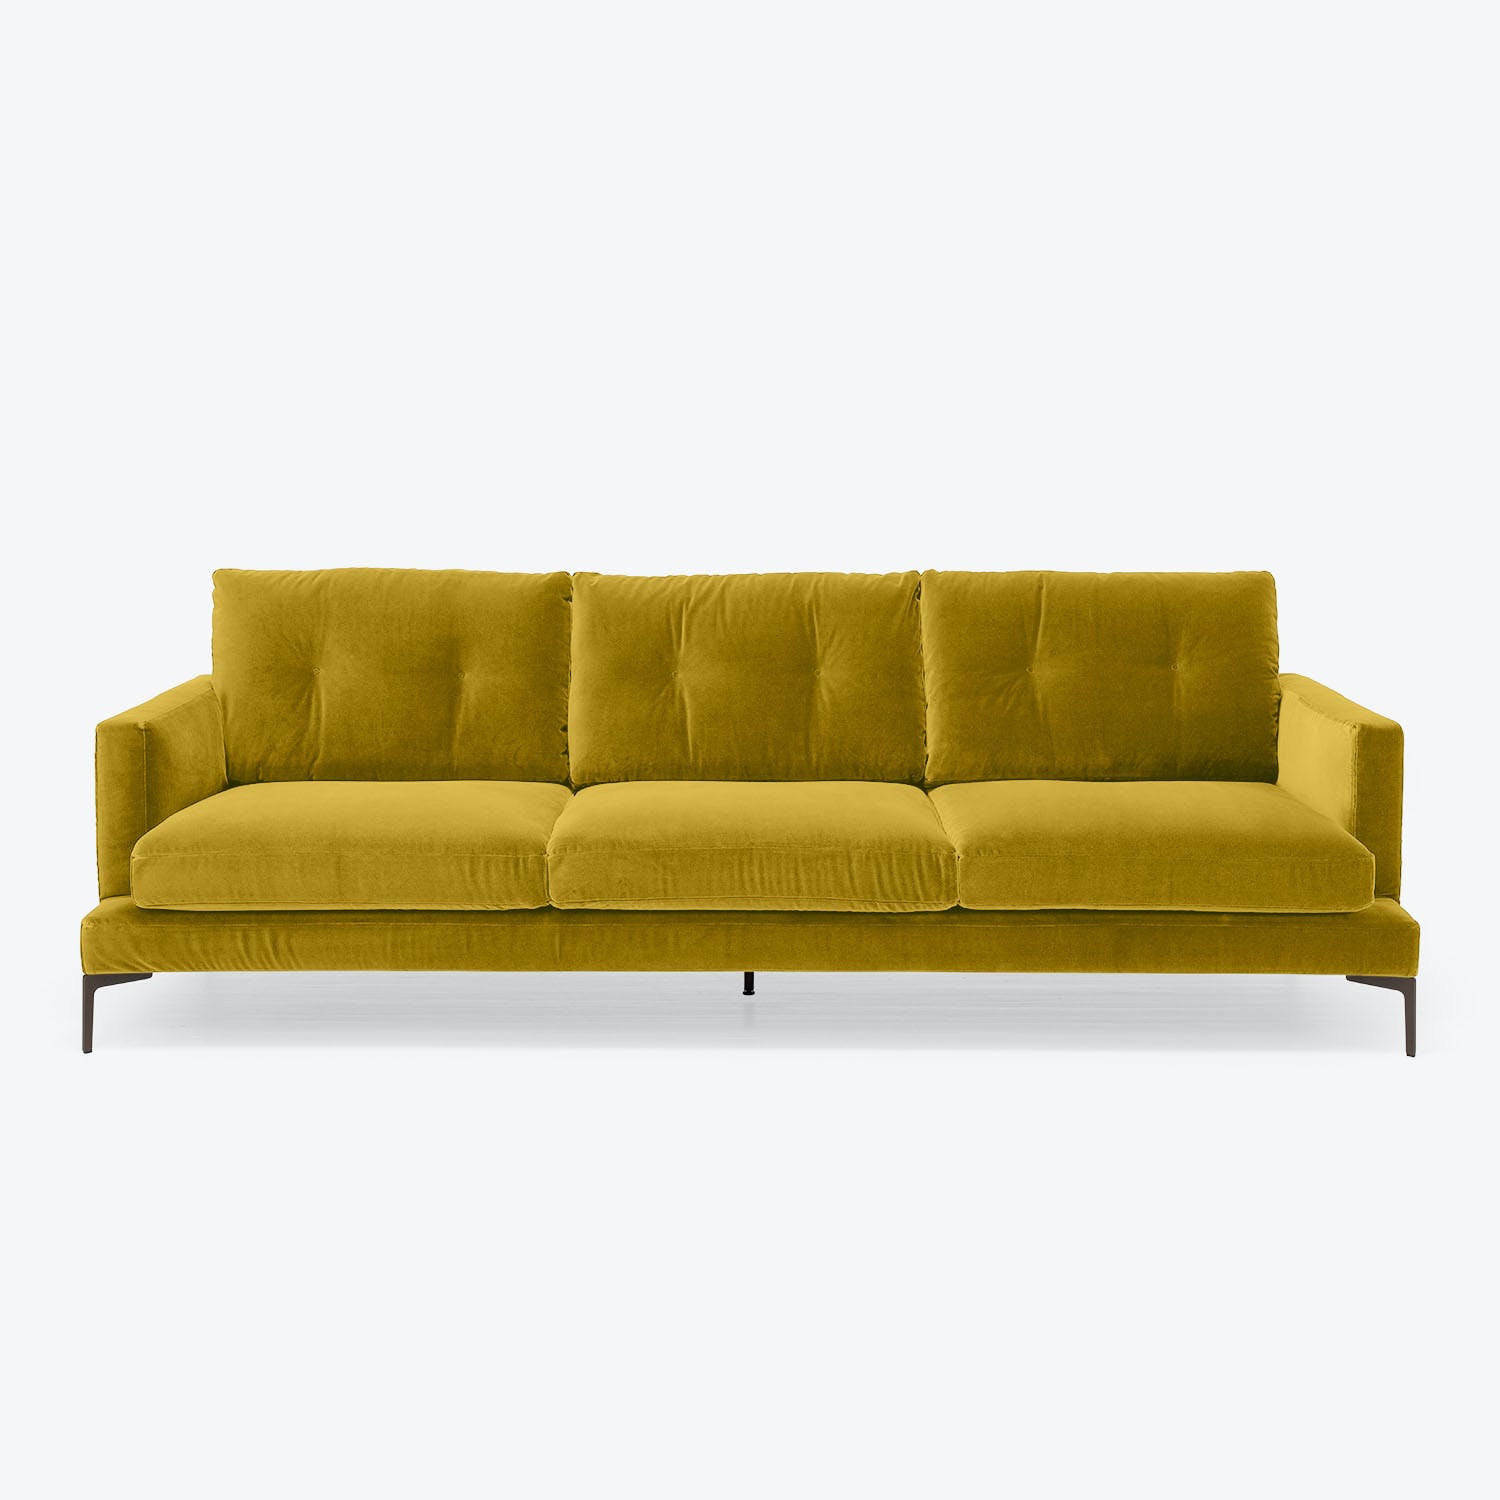 Modern three-seater sofa in bold mustard velvet with sleek design.